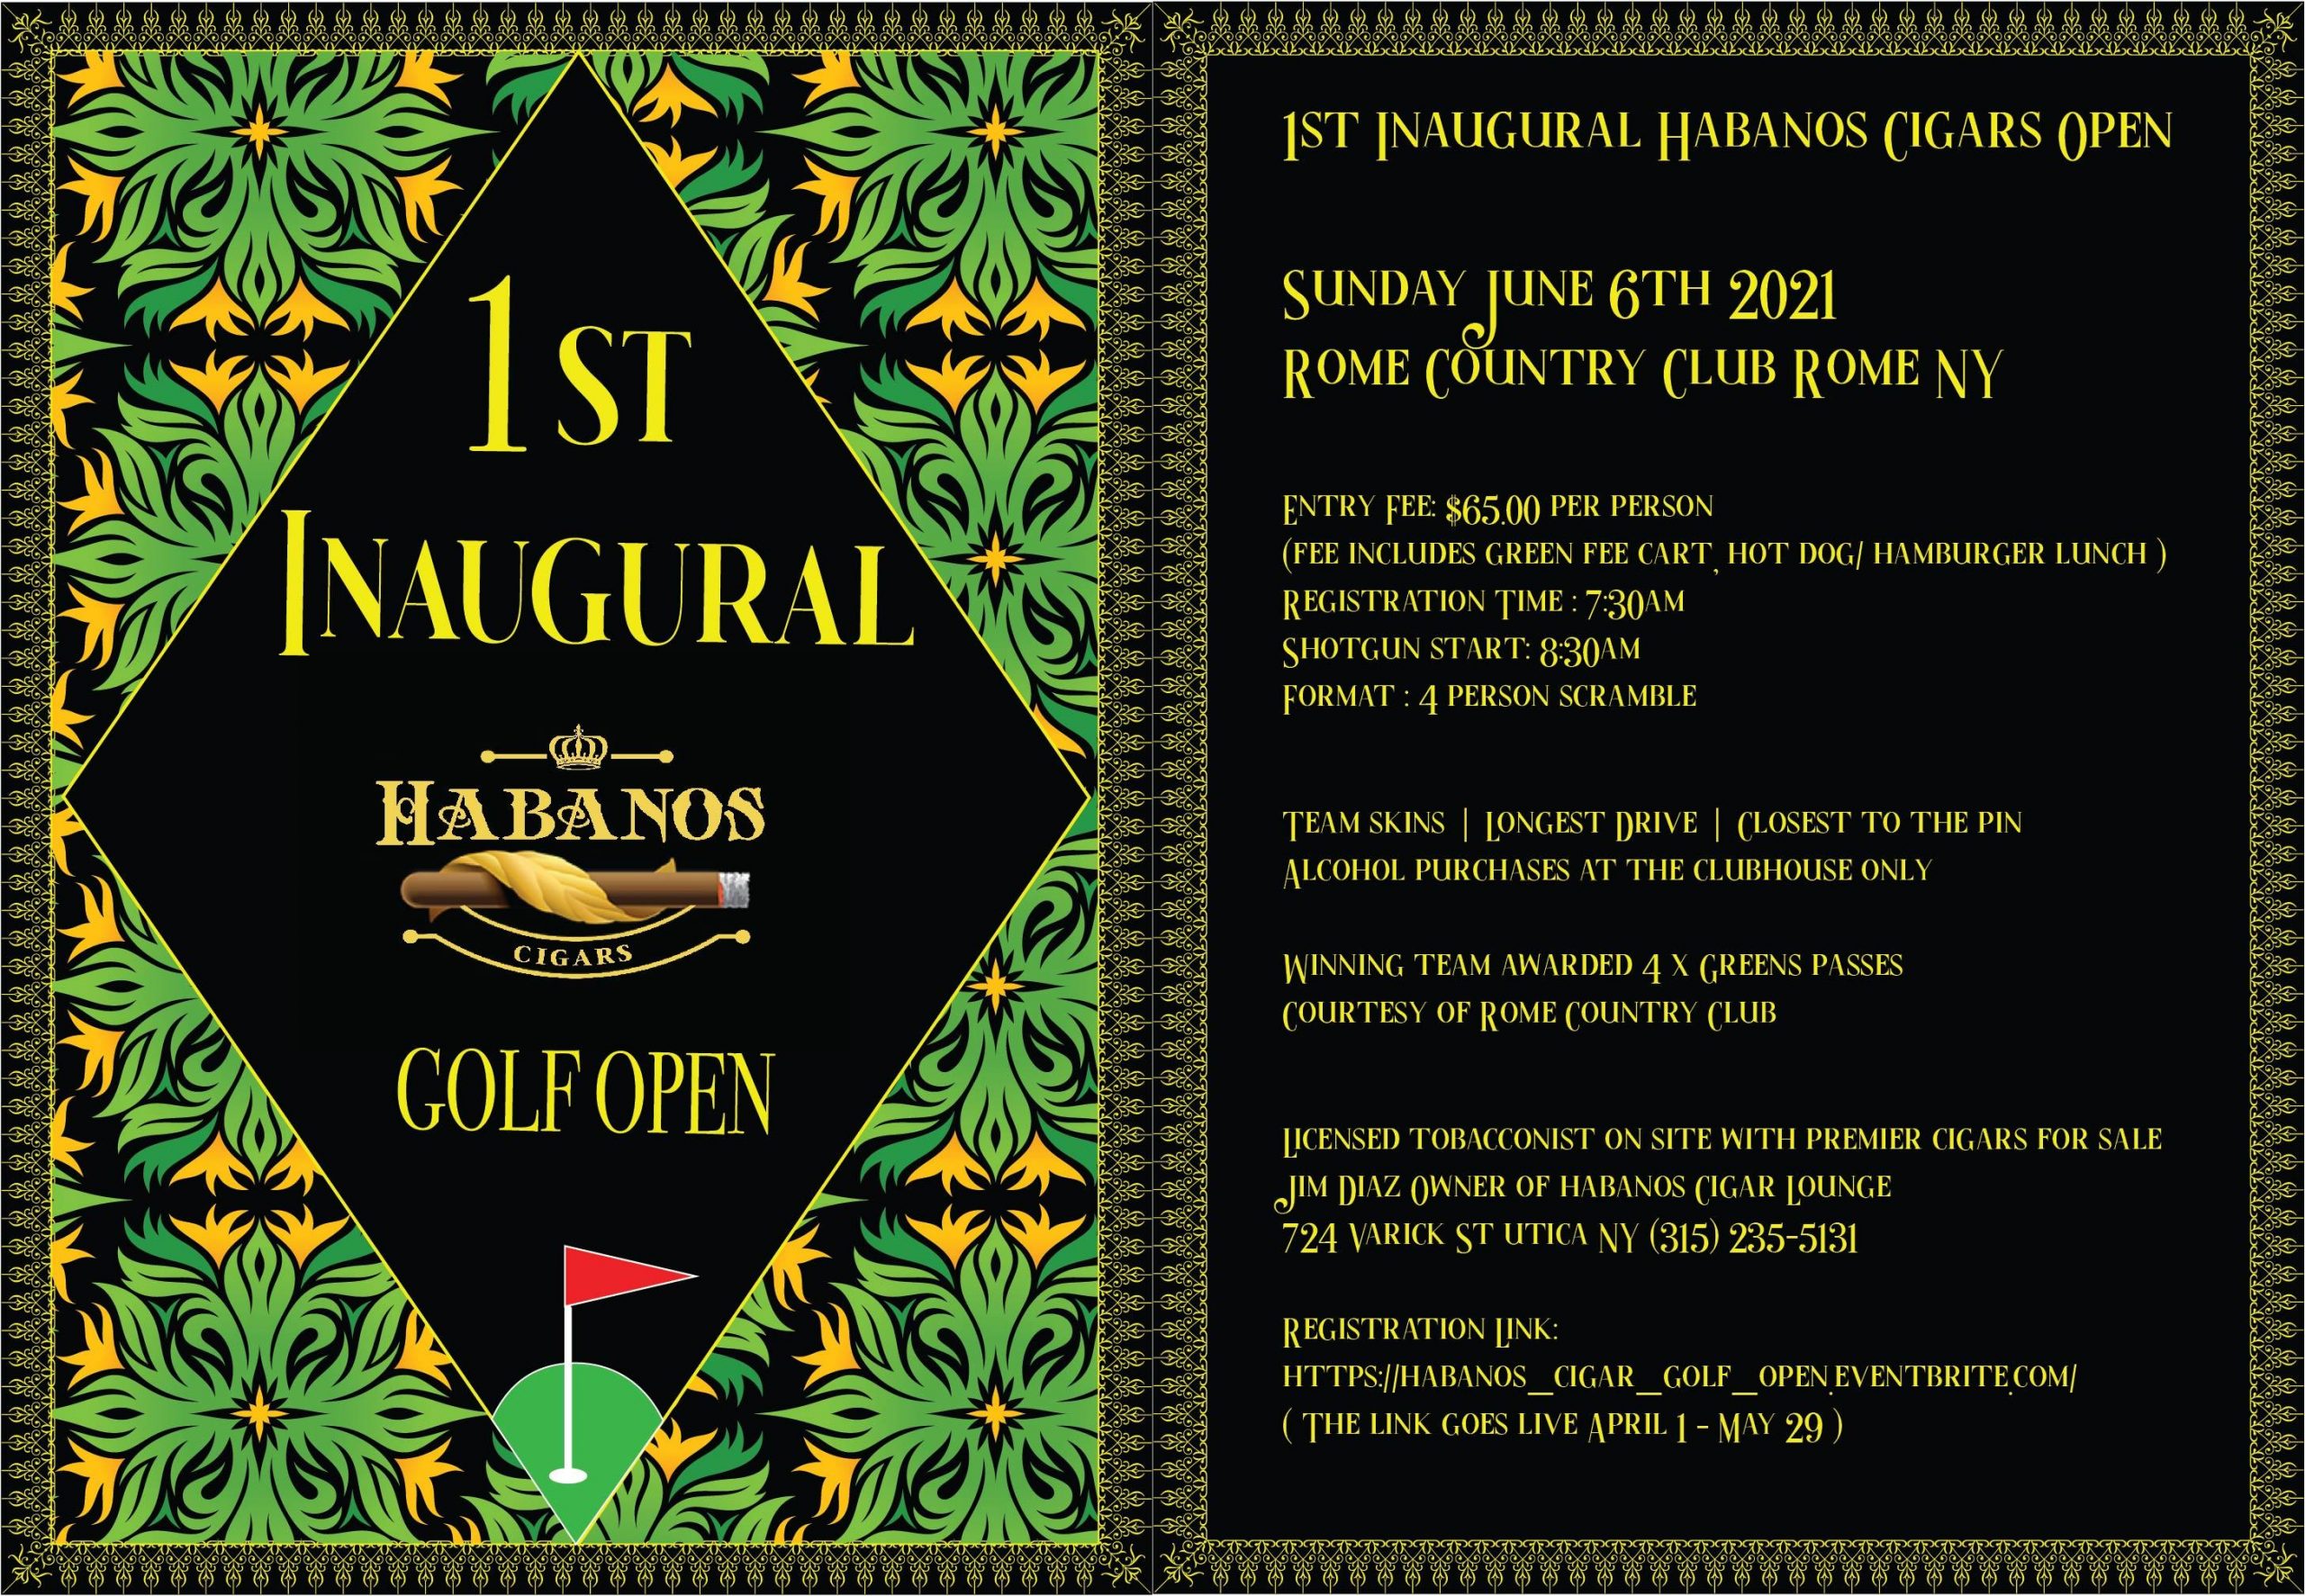 First Inaugural Habanos Cigar Golf Open